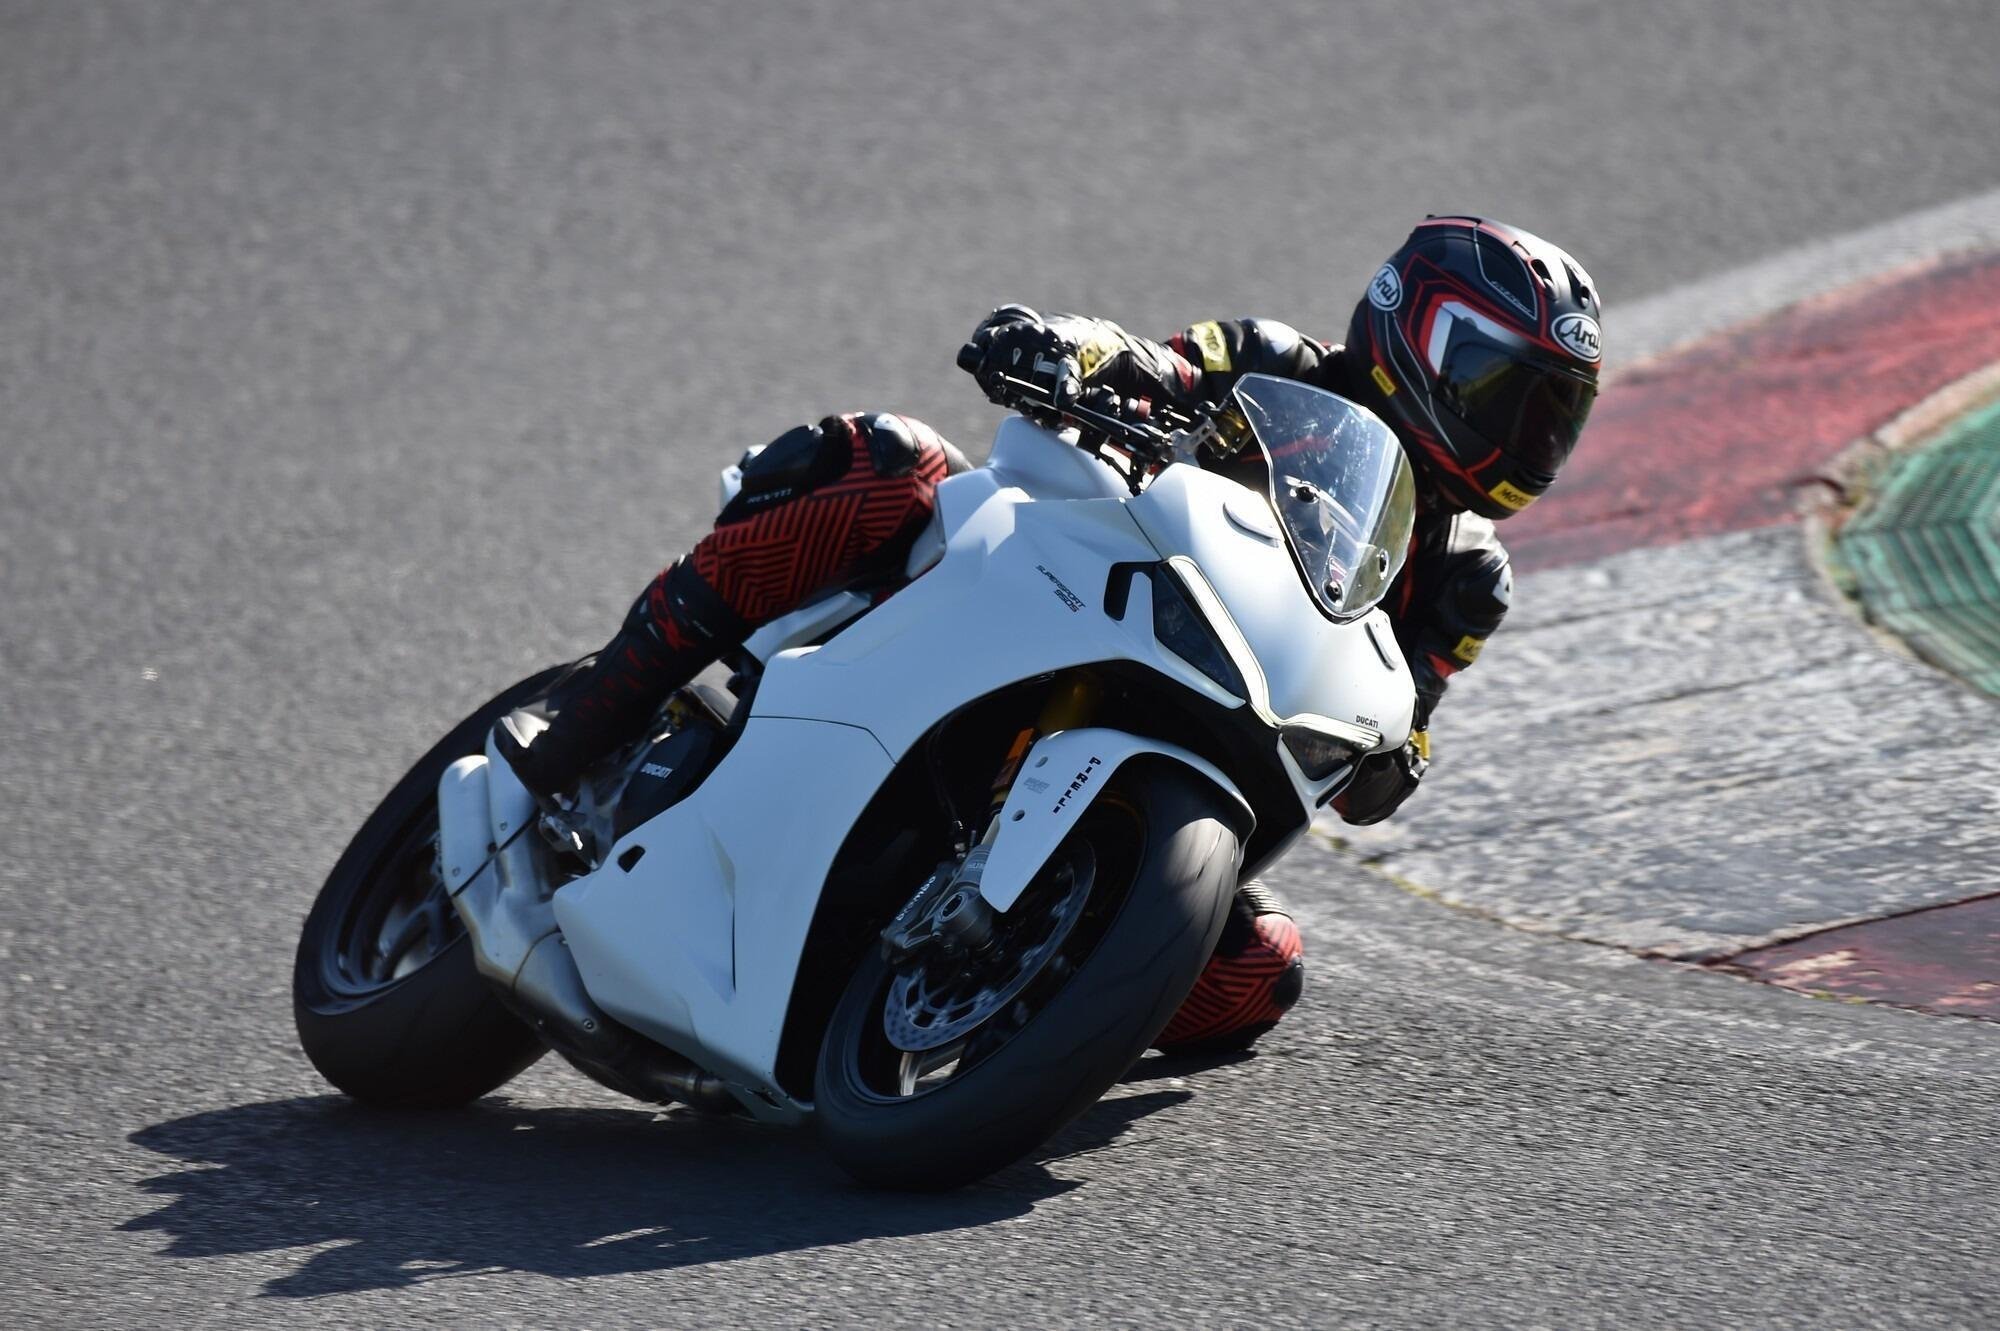 Ducati SuperSport 950 S TEST: sportivit&agrave; versatile